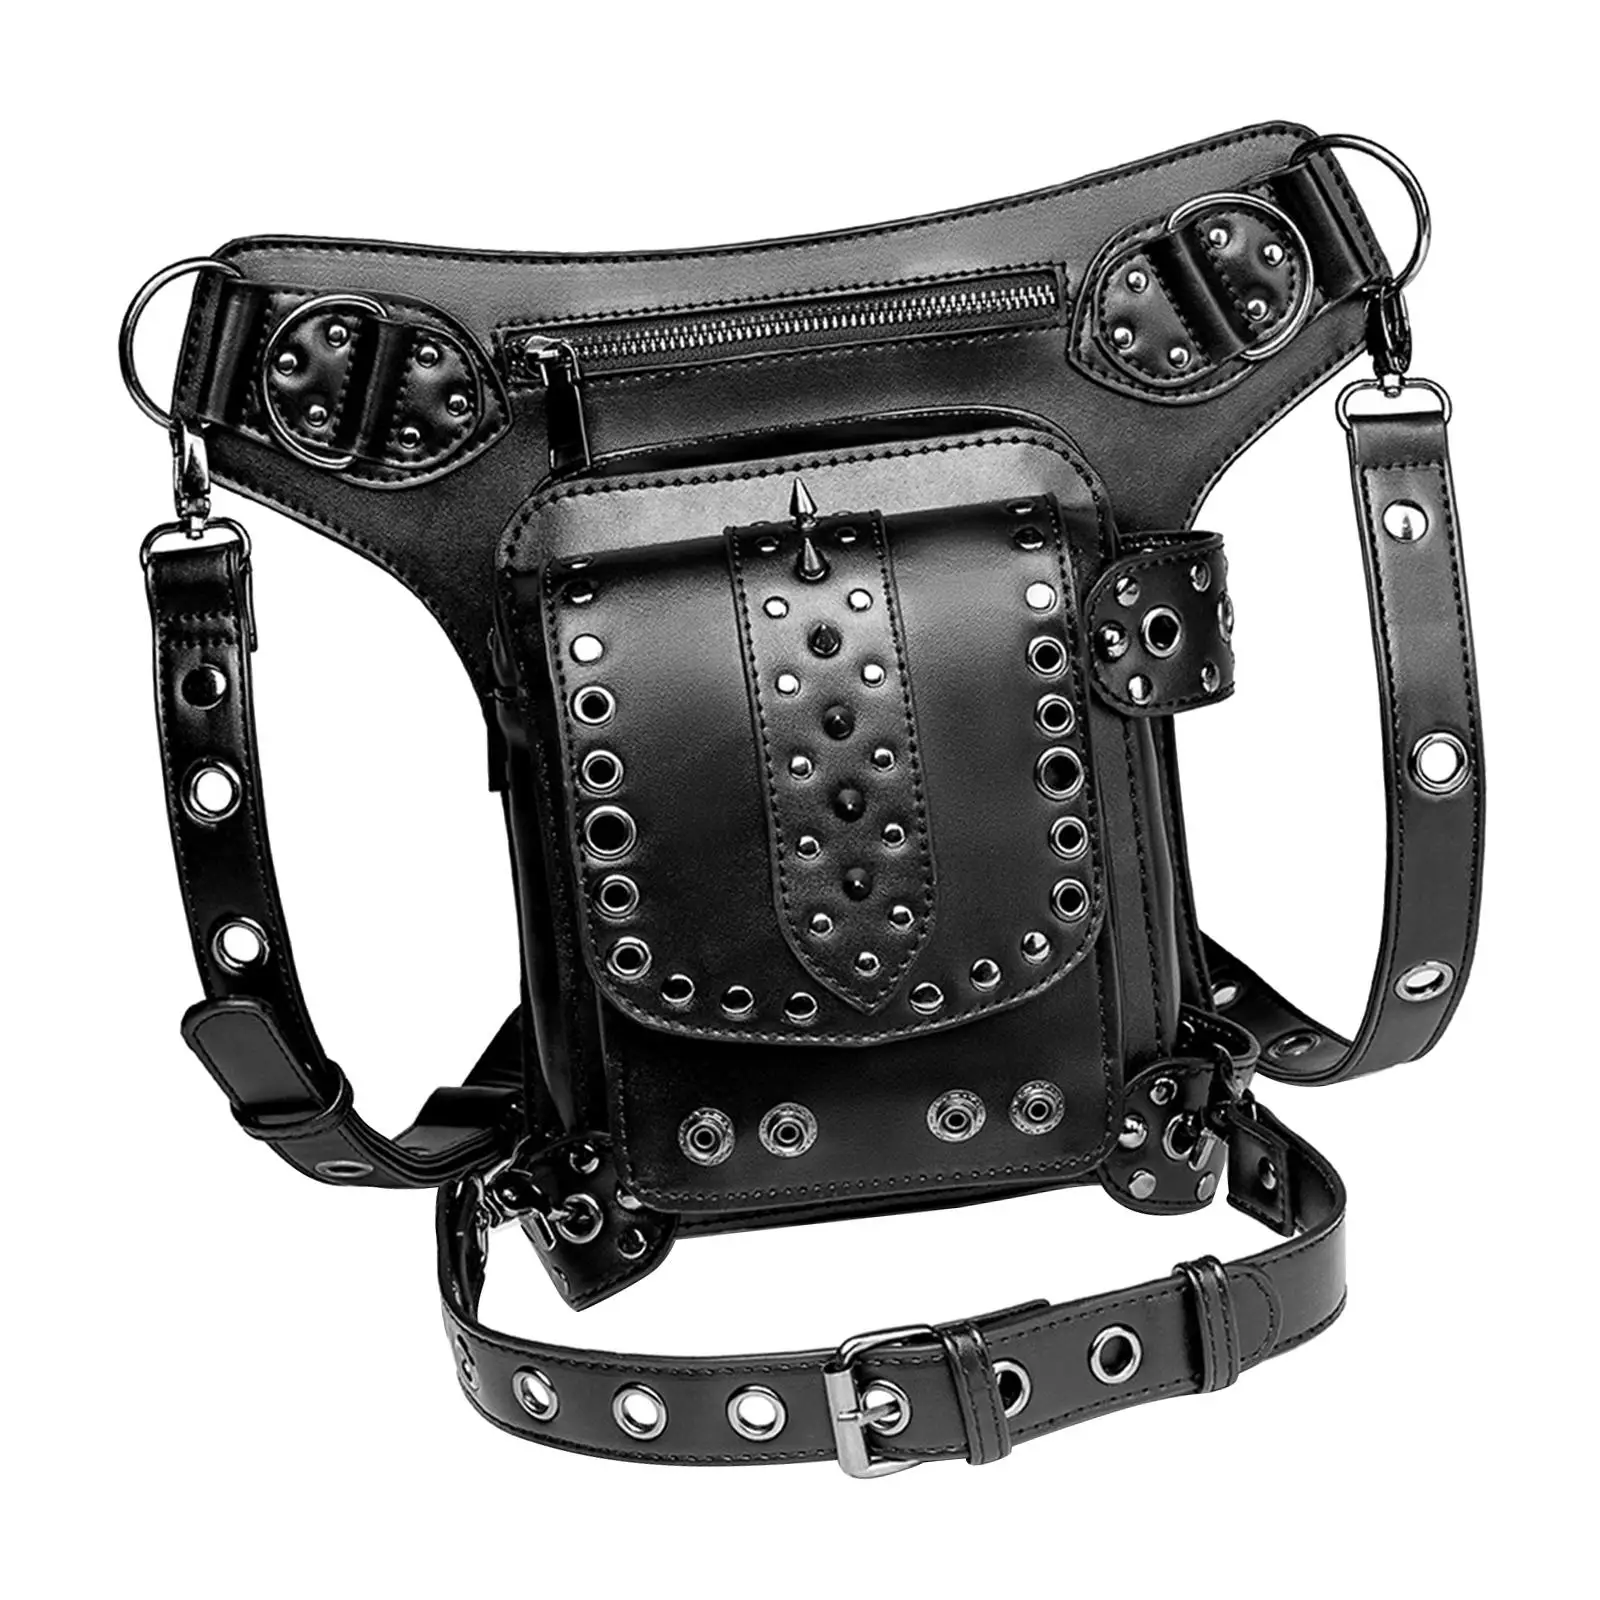 Gothic Steampunk Waist Bag Fashion PU Leather Thigh Belt Packs for Climbing